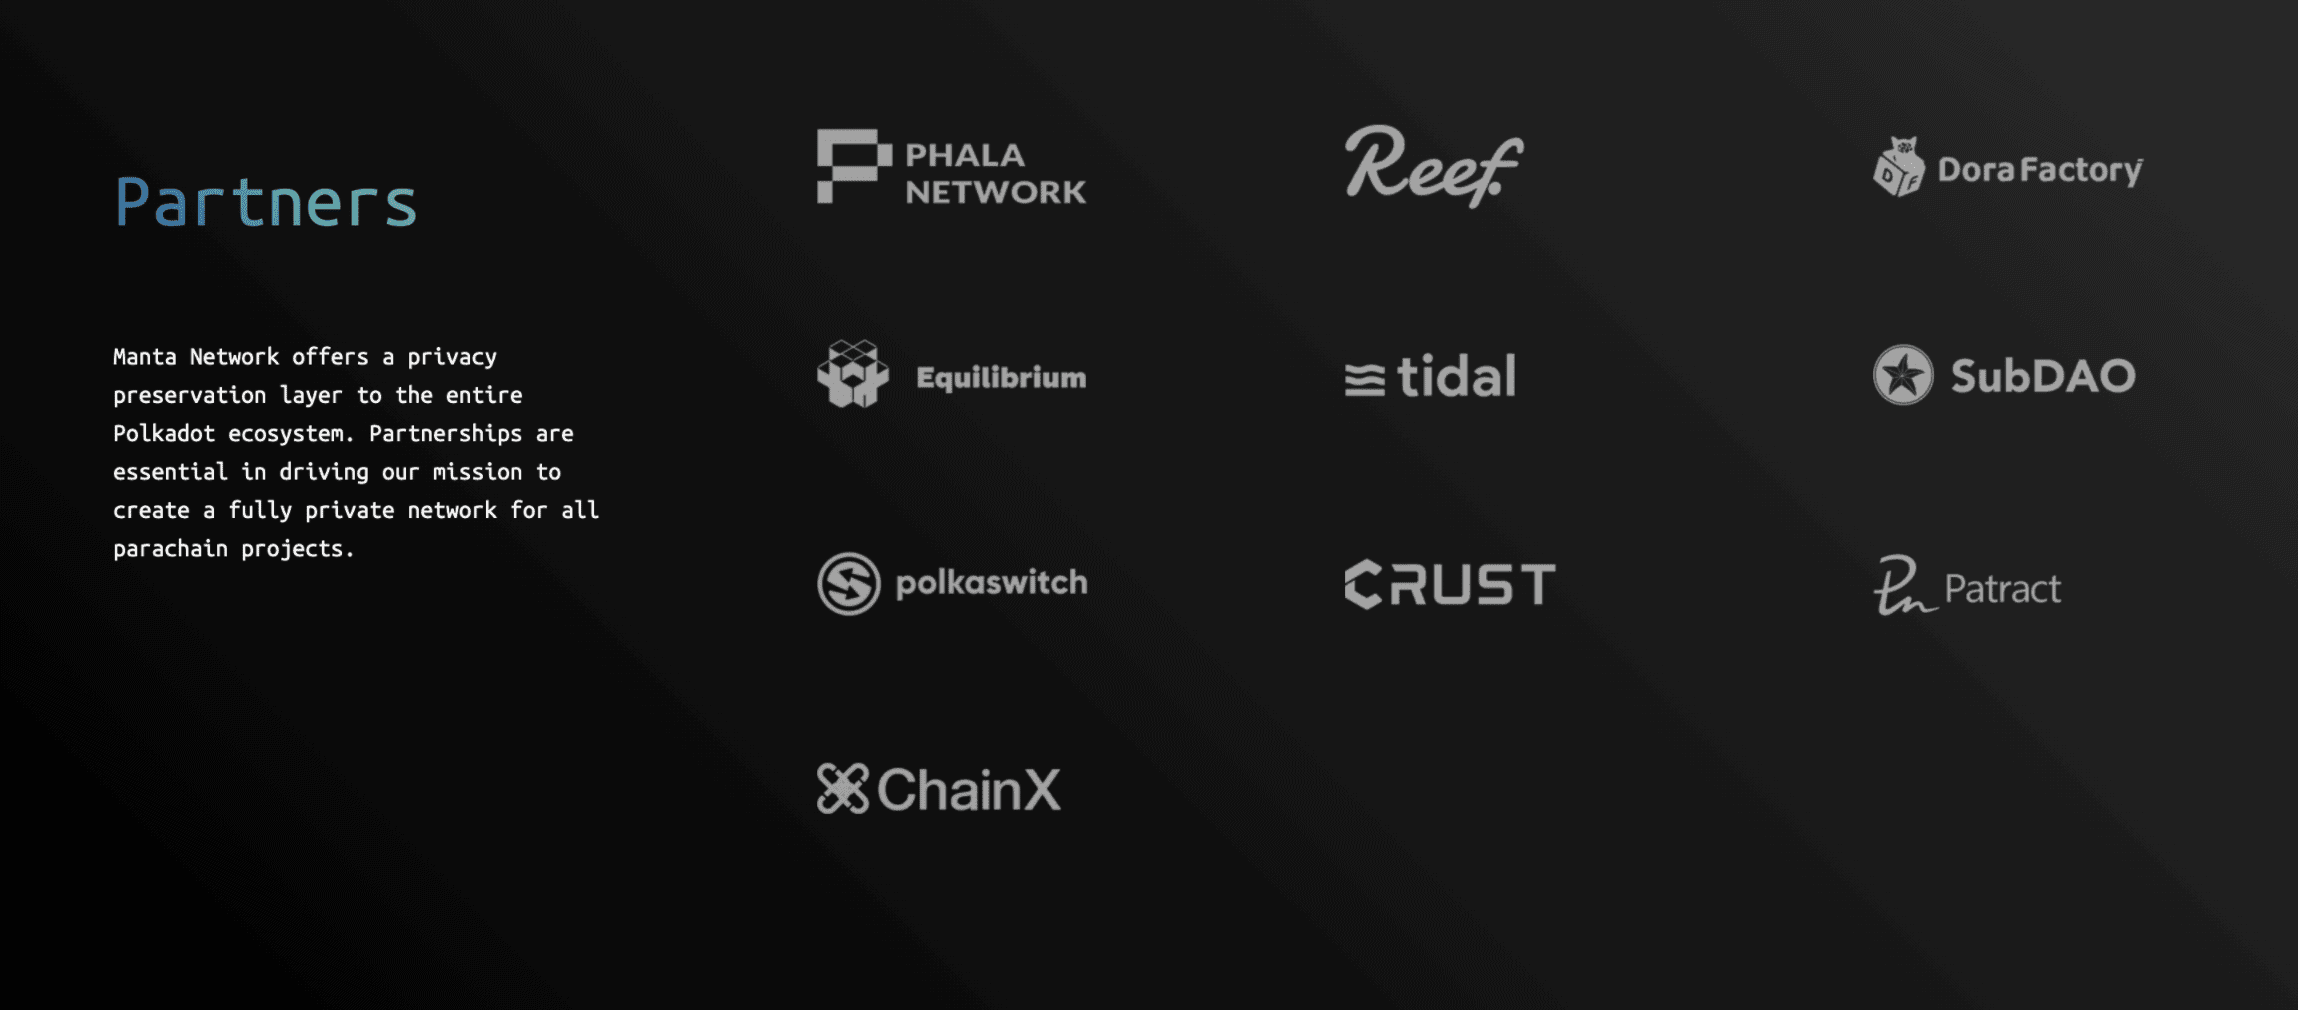 manta network partners